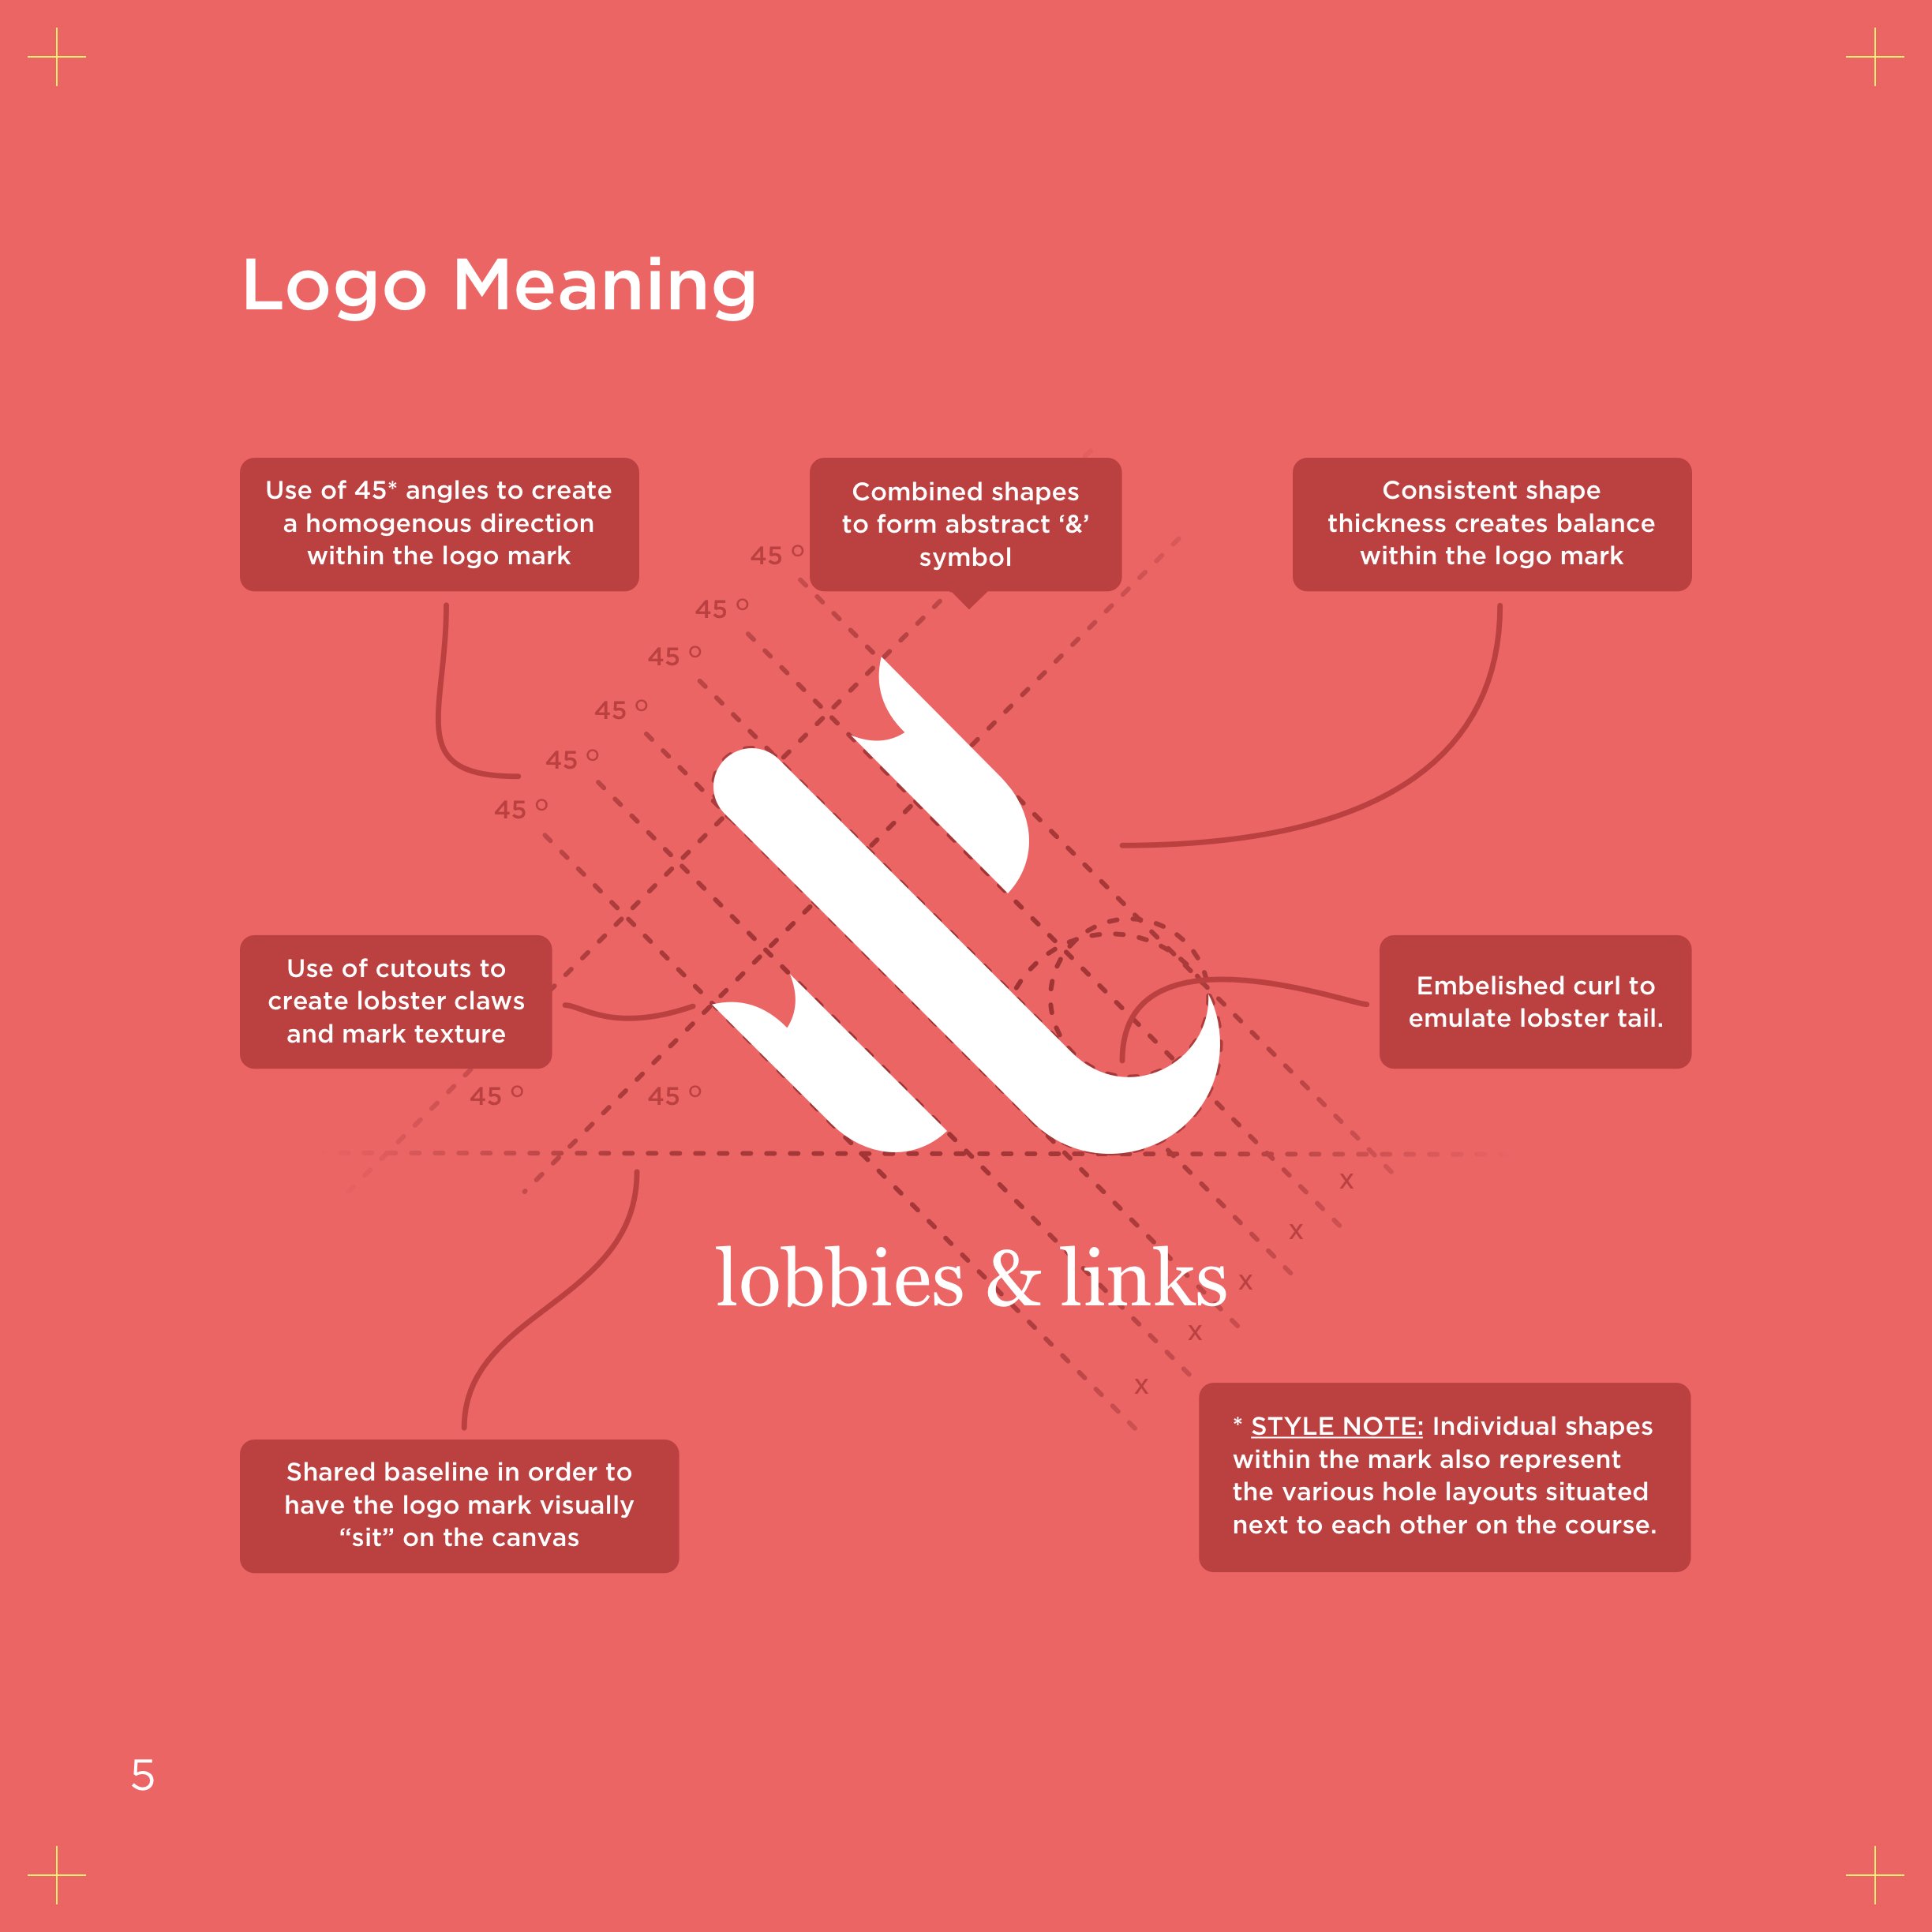 05_L&L_BrandBook_LogoMeaning Copy.jpg